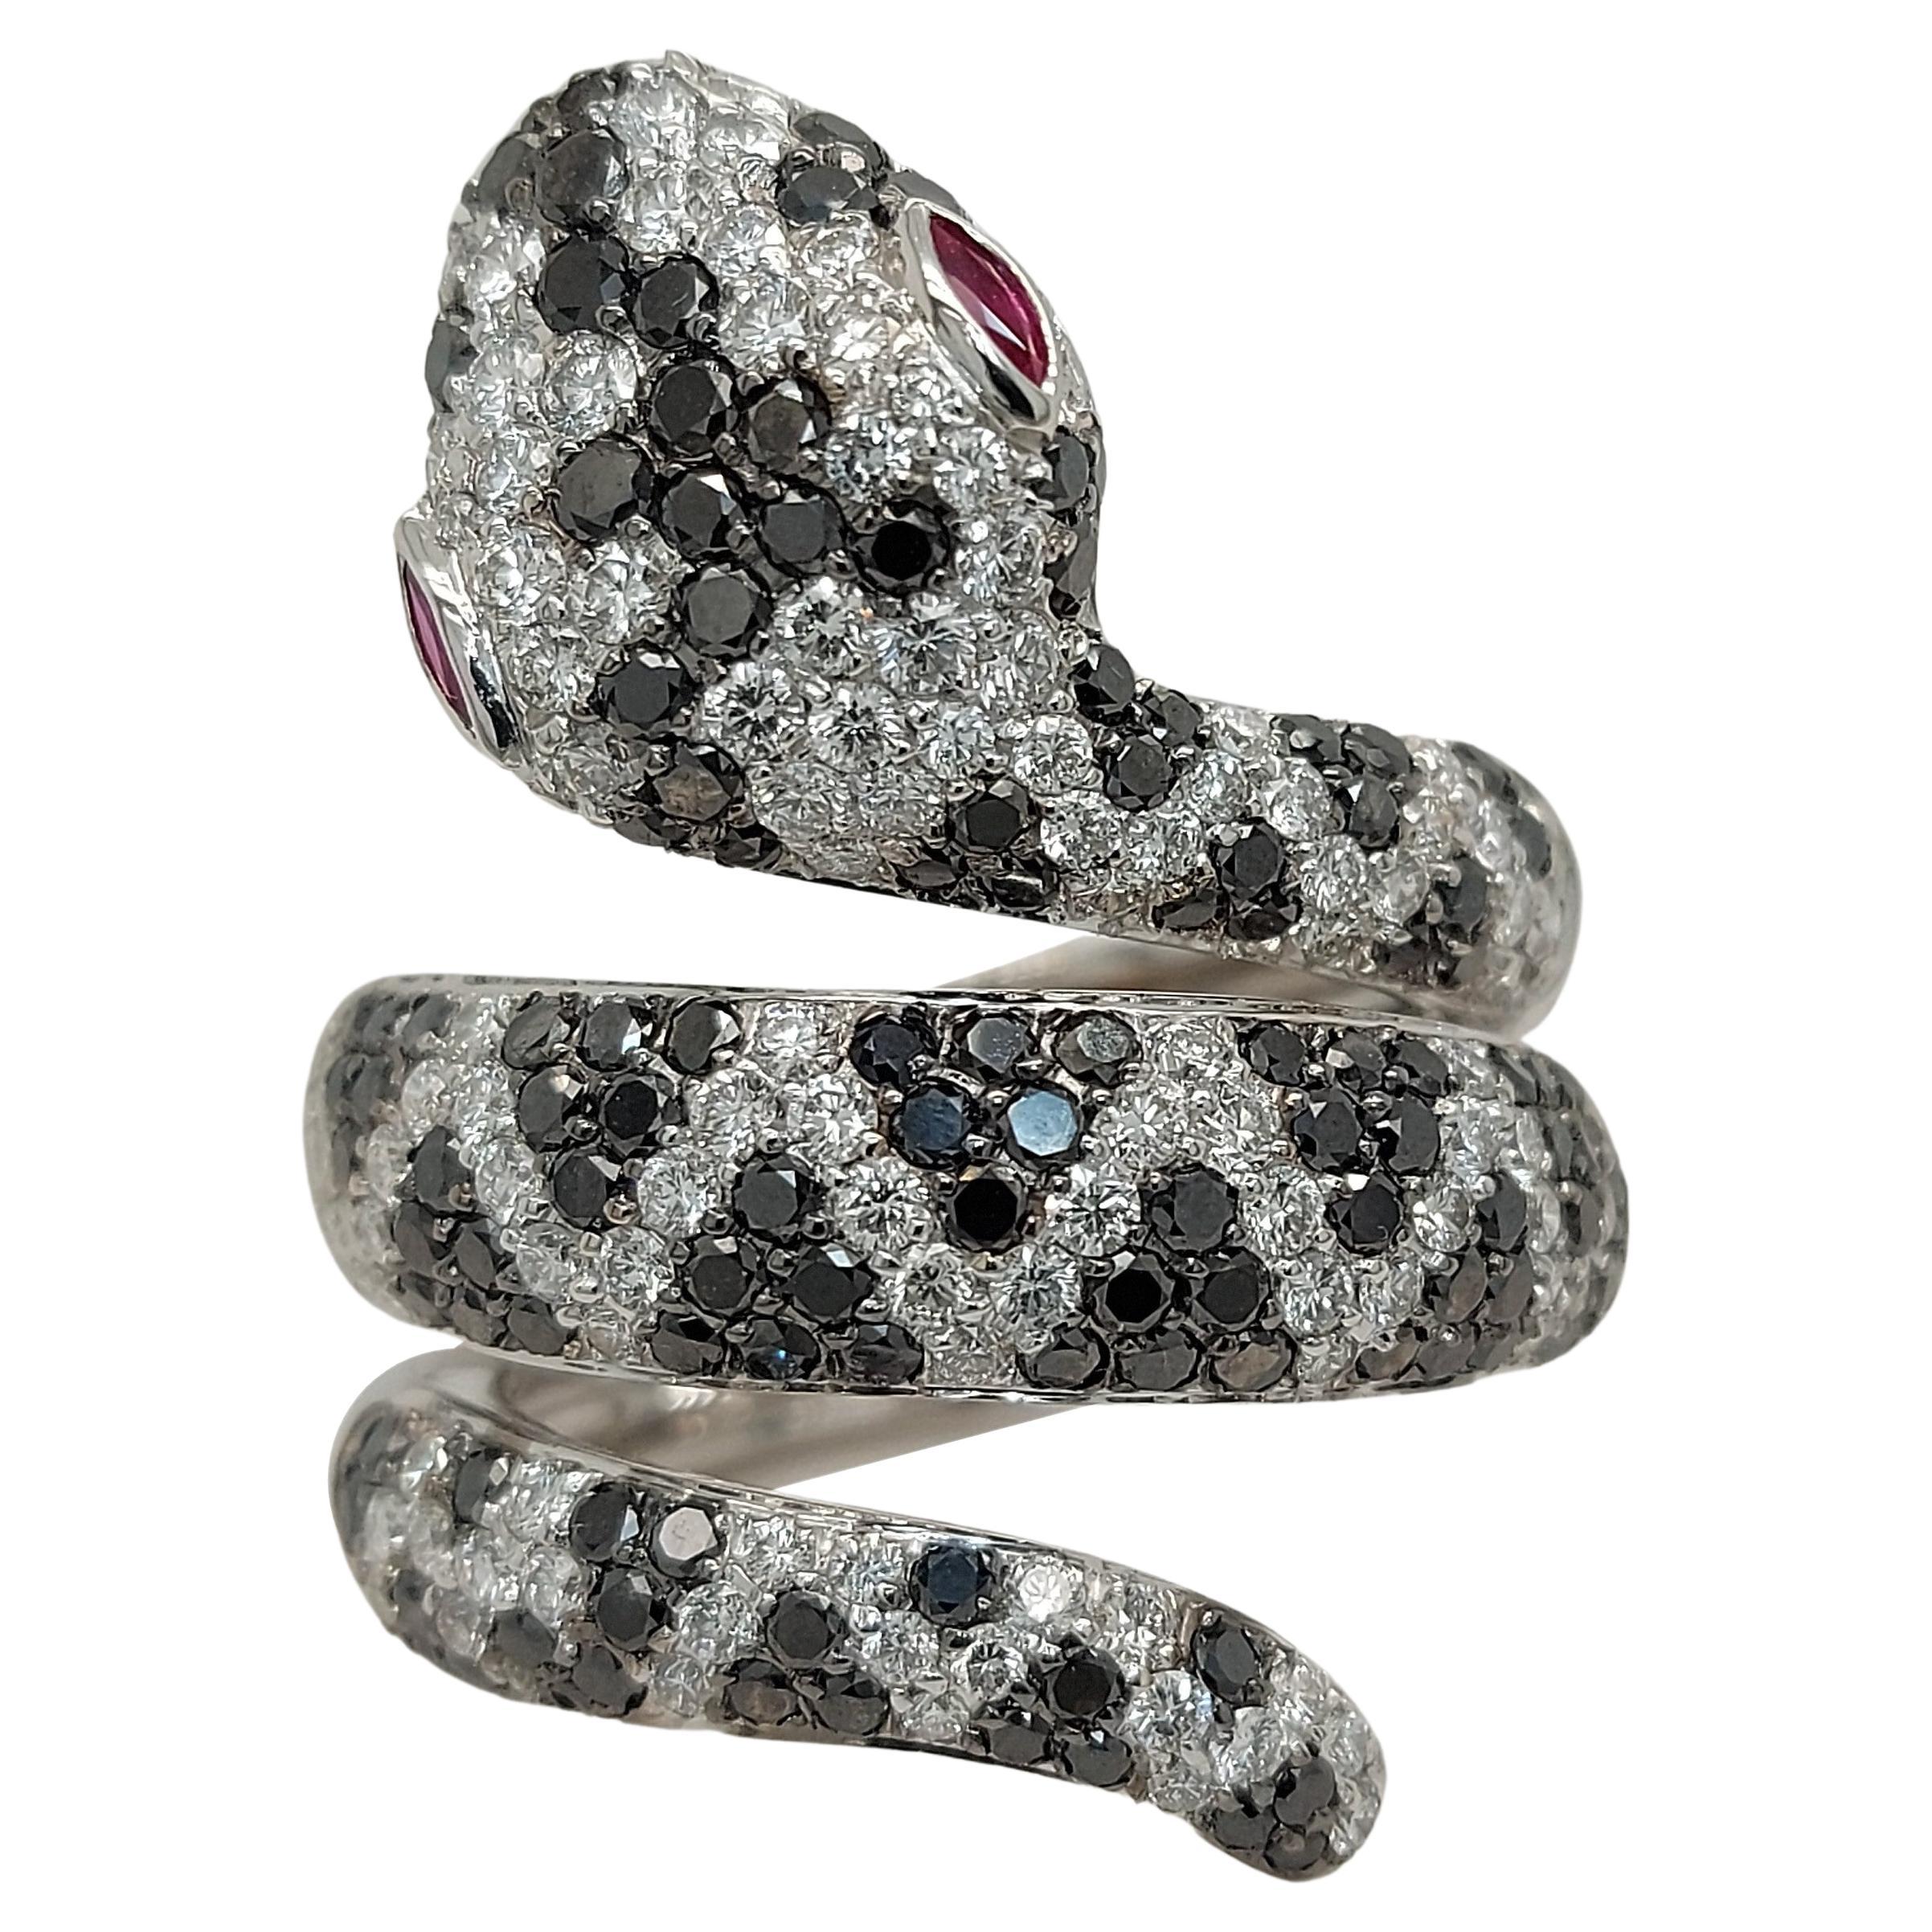 18kt White Gold Snake Ring with 2.04ct Black & 1.75ct White Diamonds & Ruby Eyes